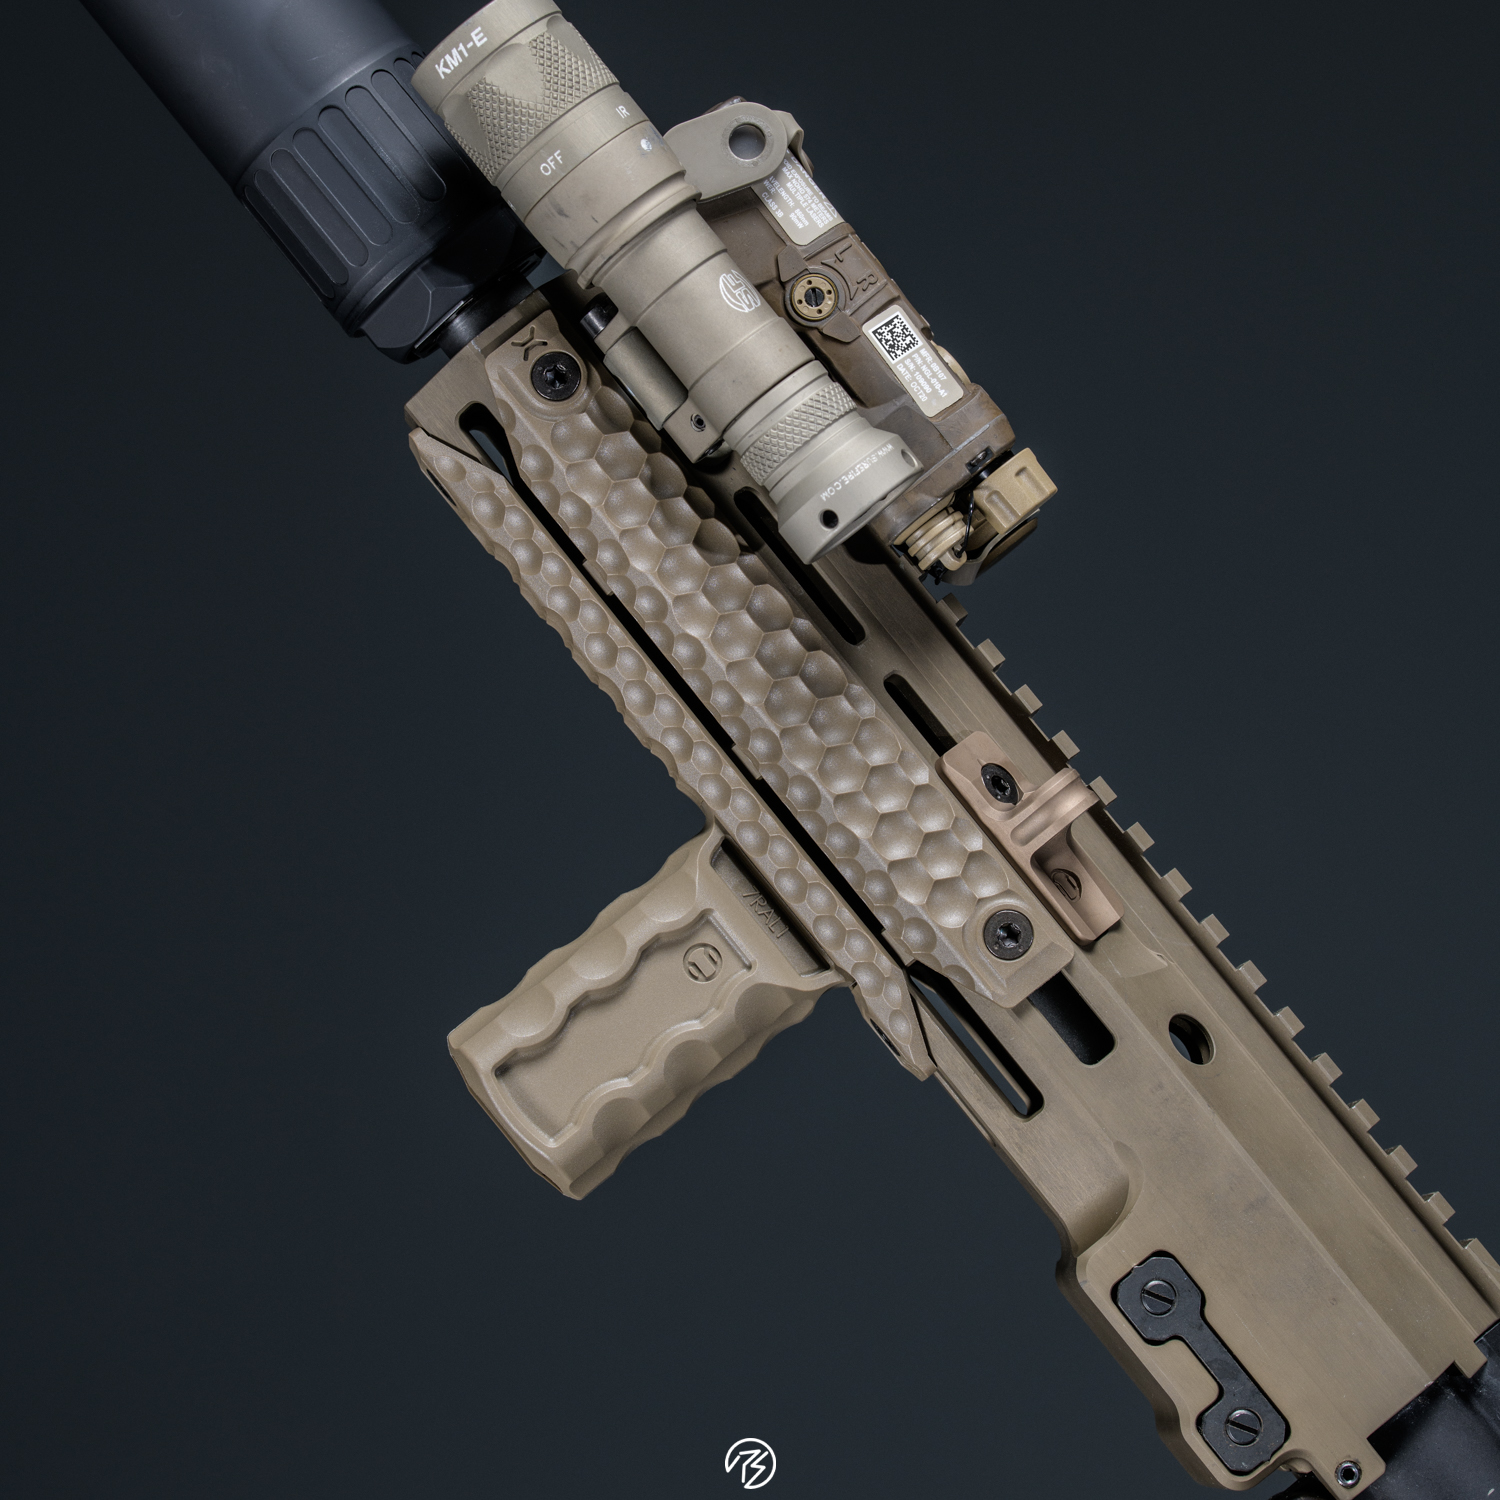 AR-15 trigger control